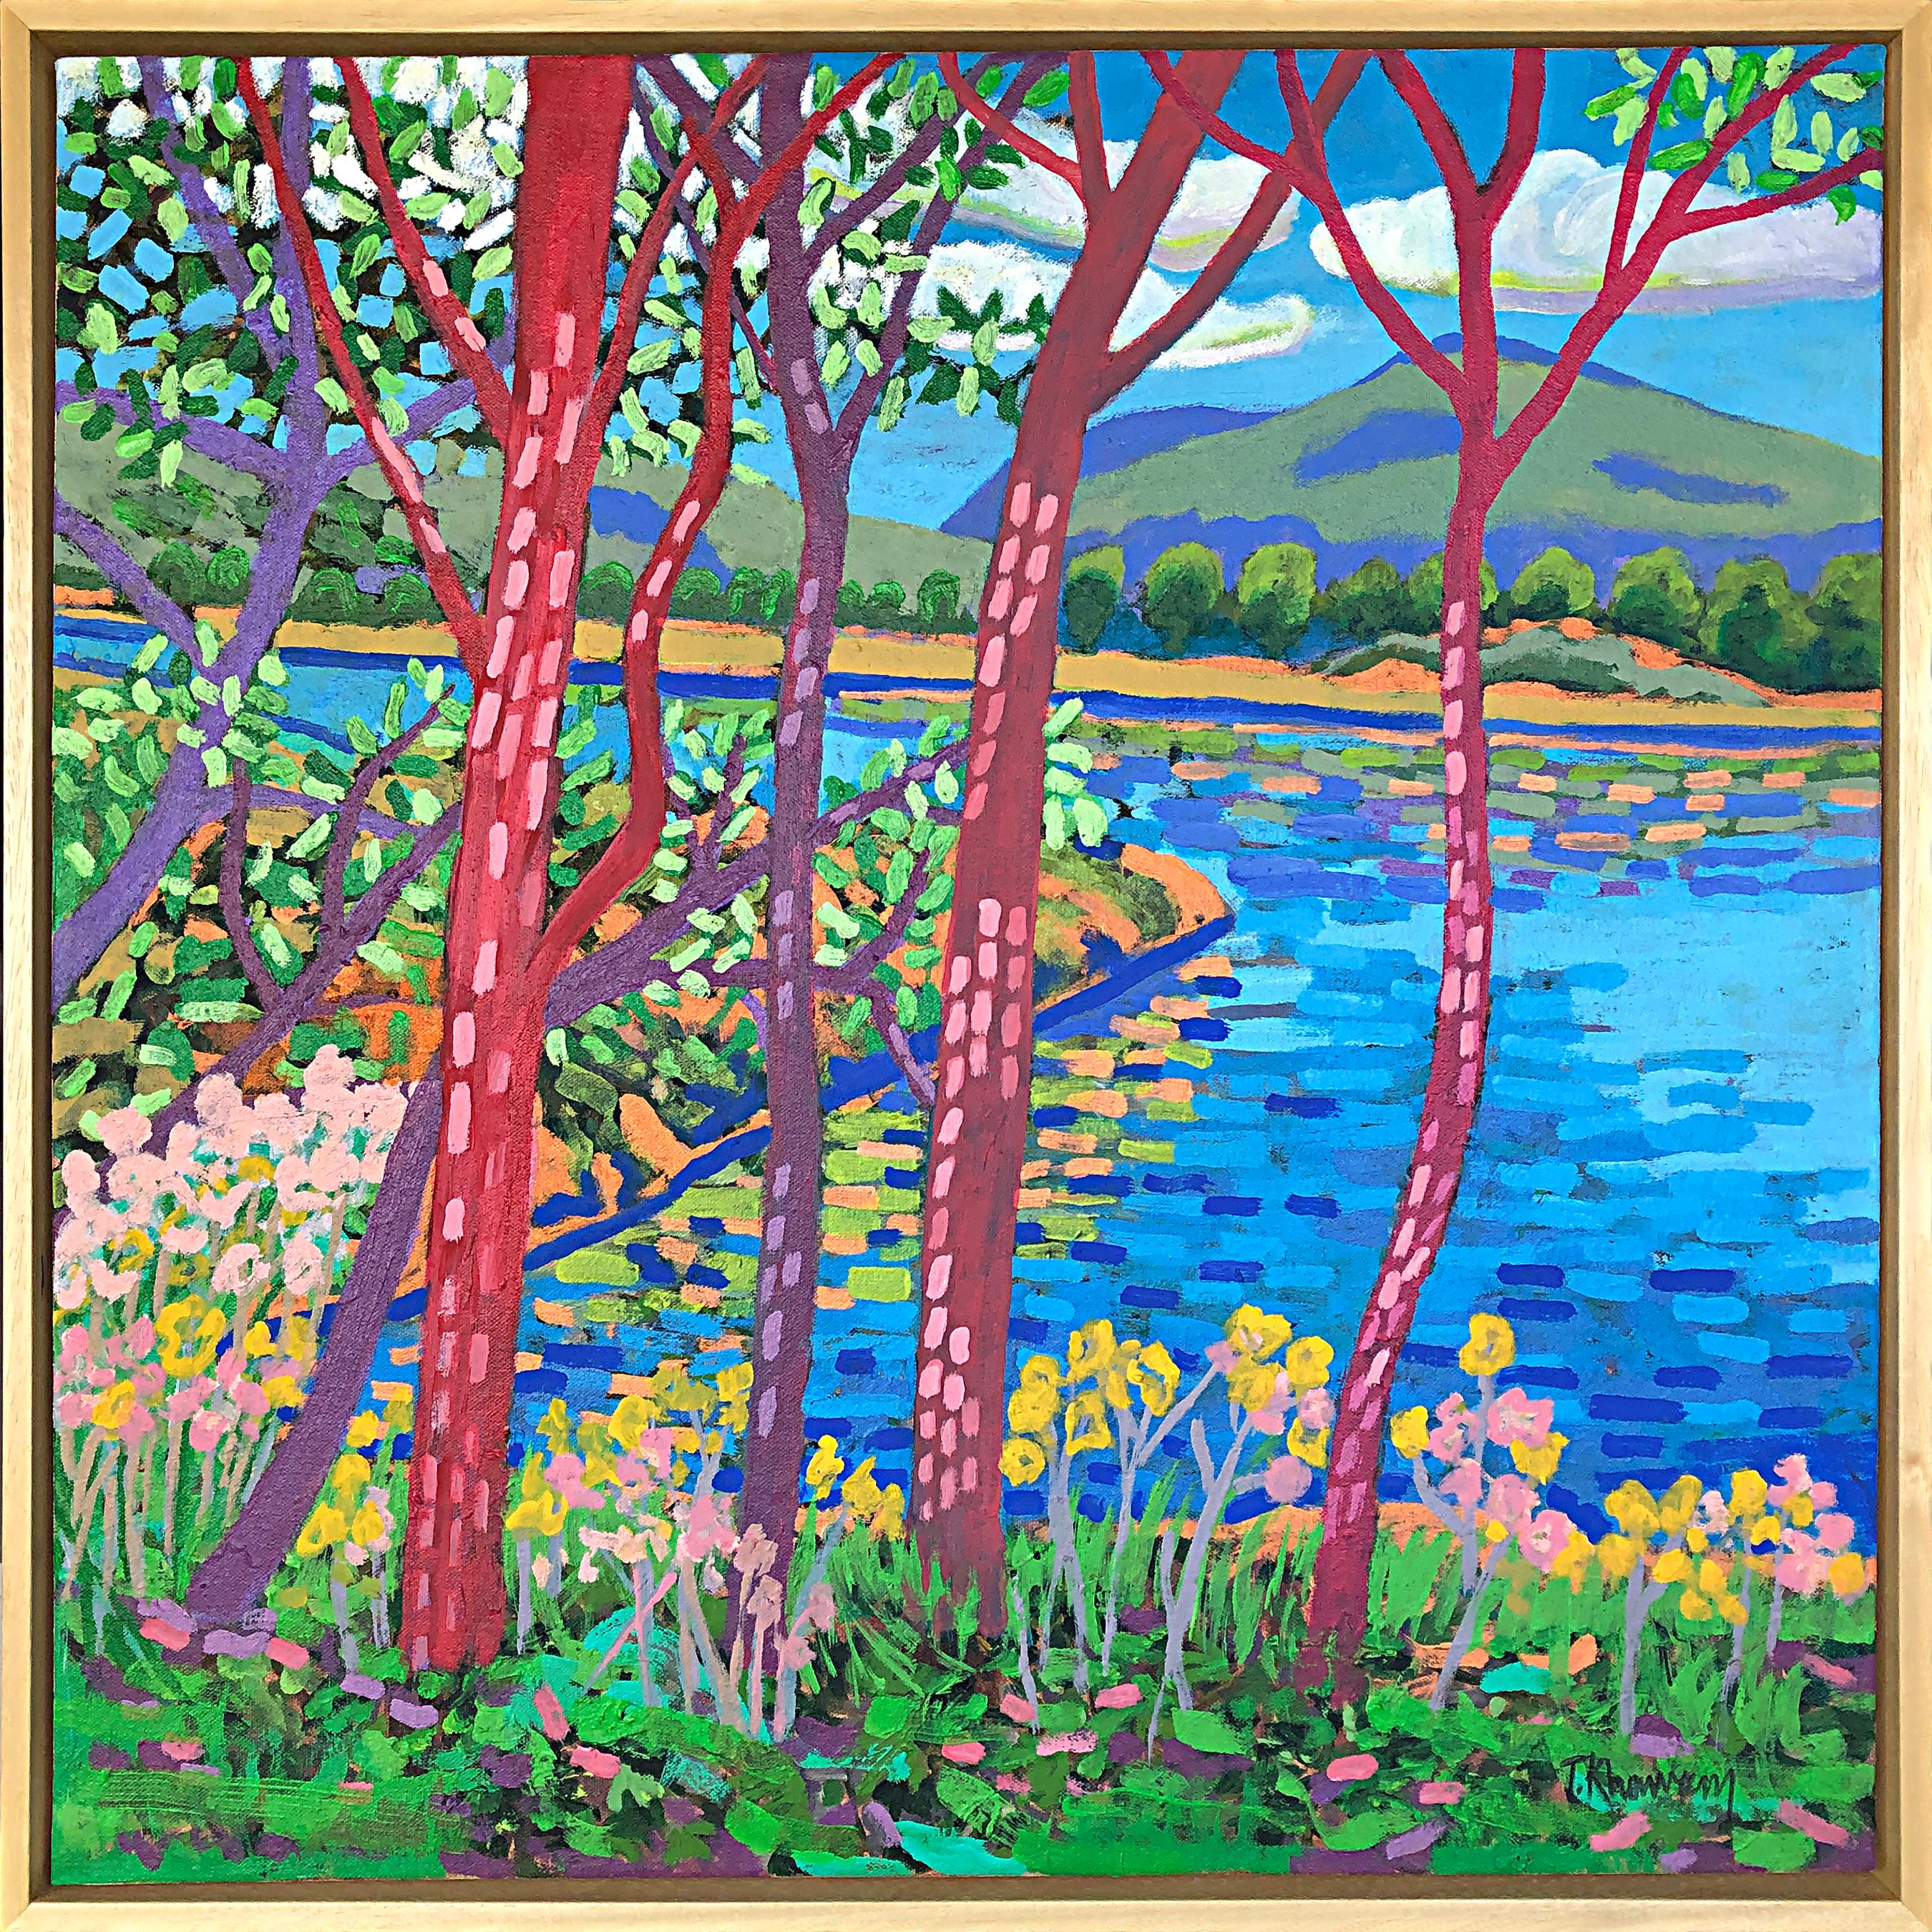 Tony Khawam Landscape Painting - West Point Through the Marshlands